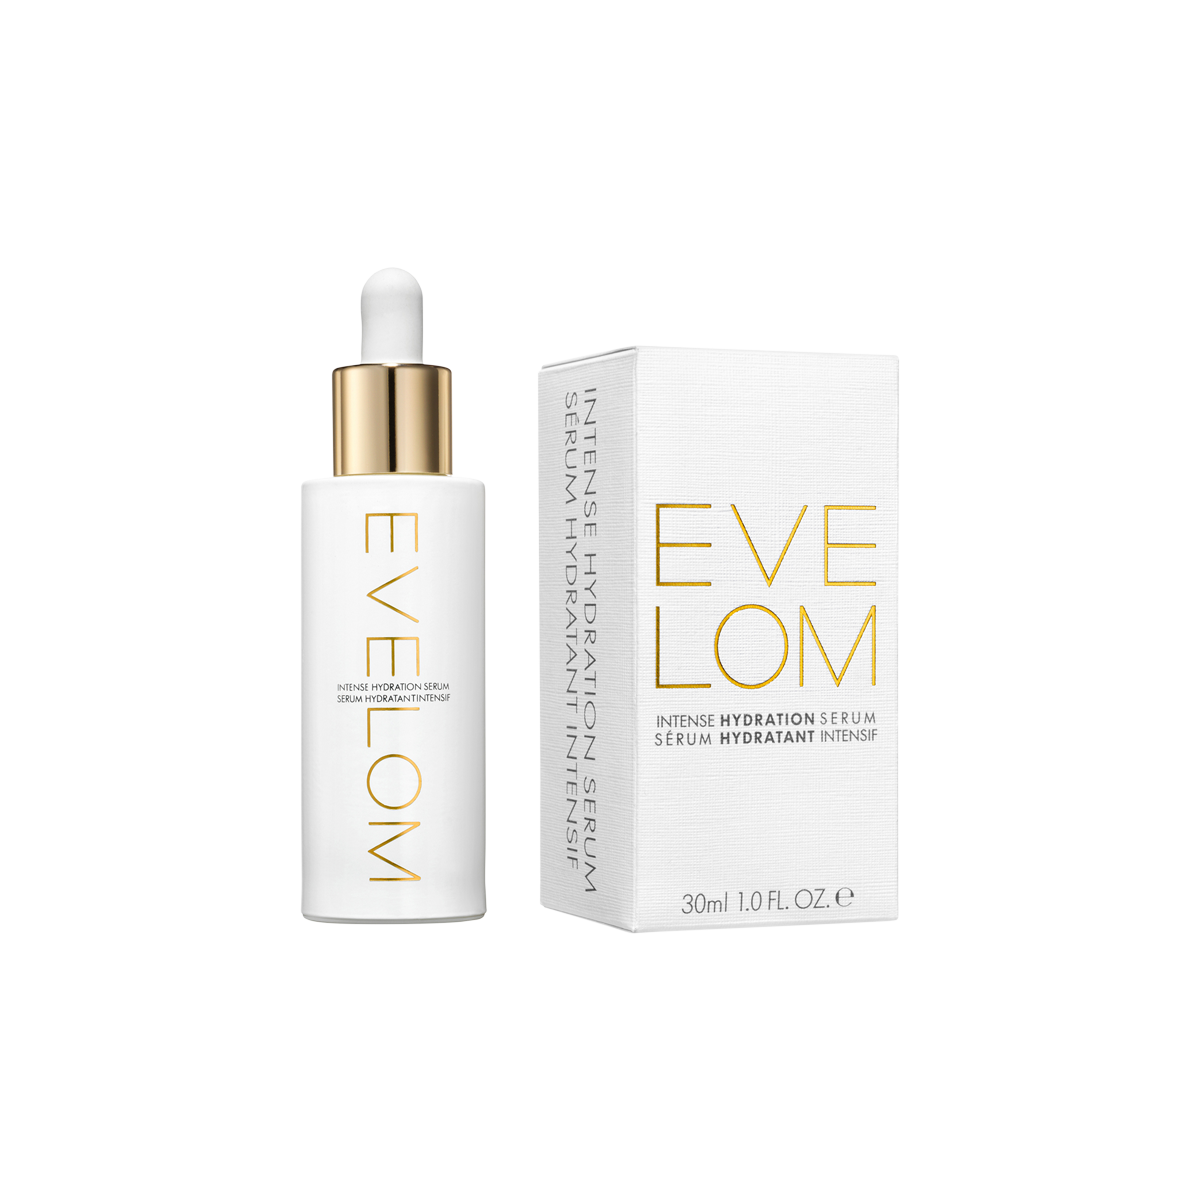 Eve Lom - Intense Hydration Serum